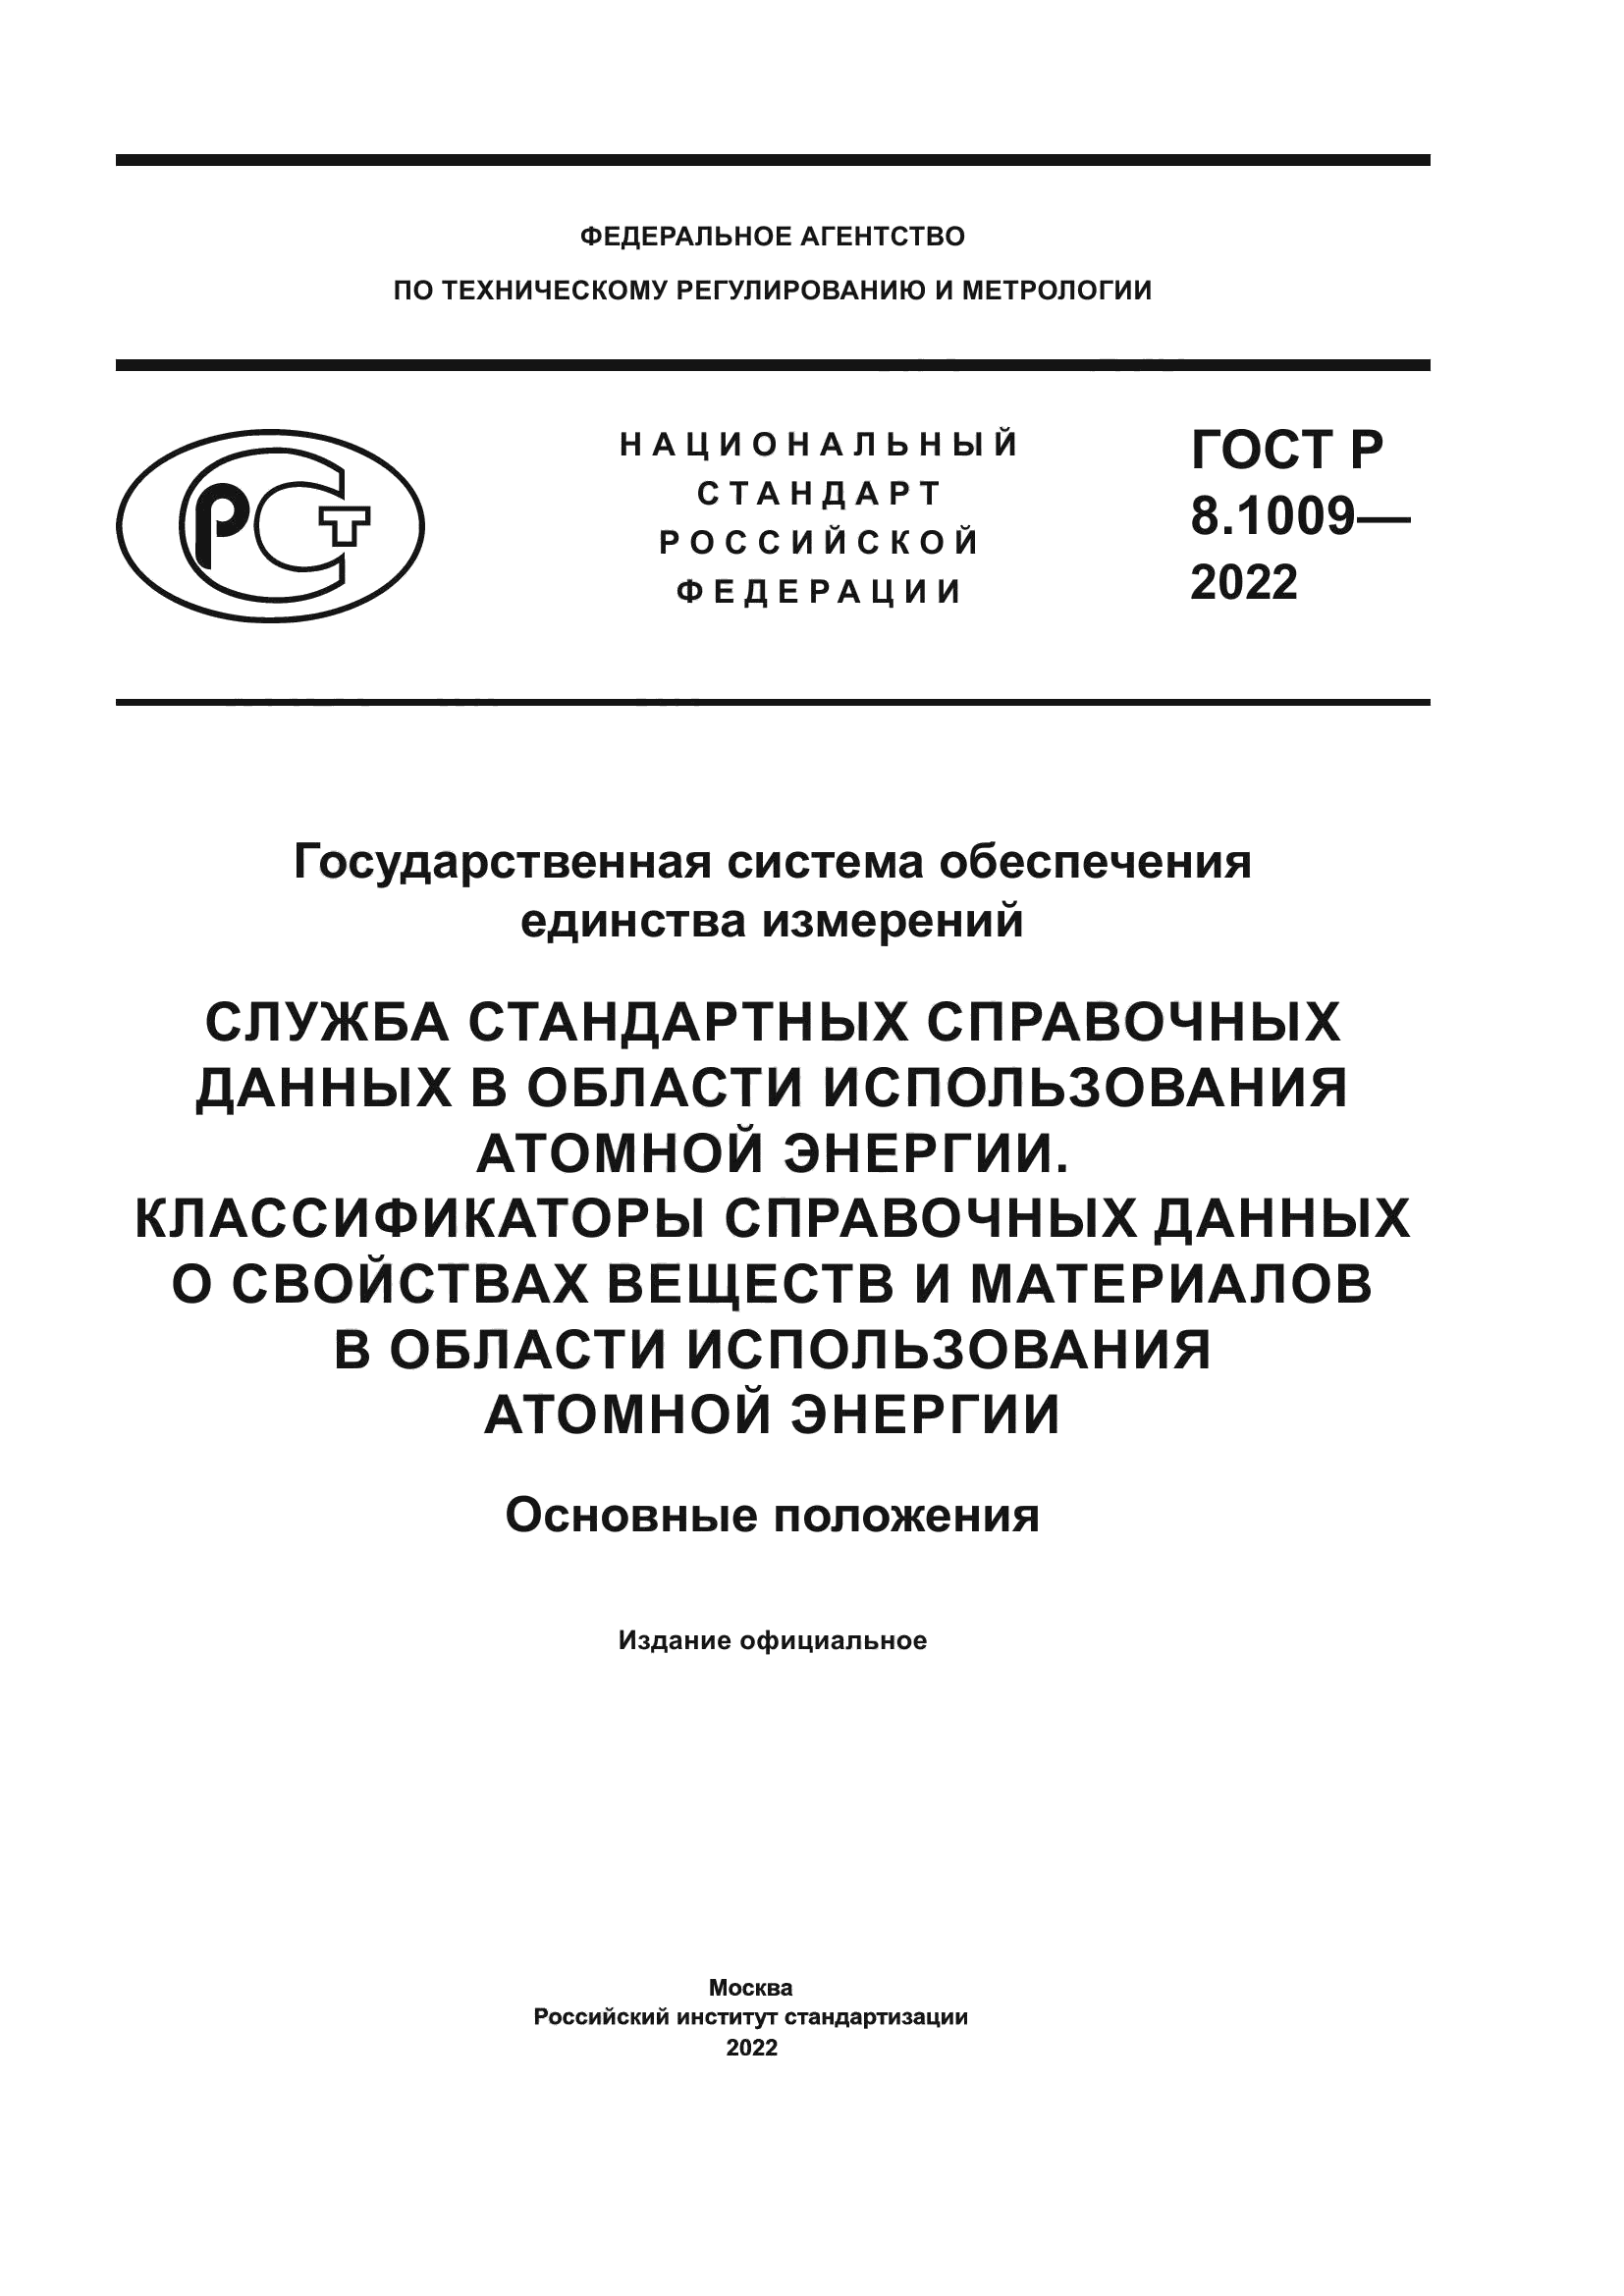 ГОСТ Р 8.1009-2022